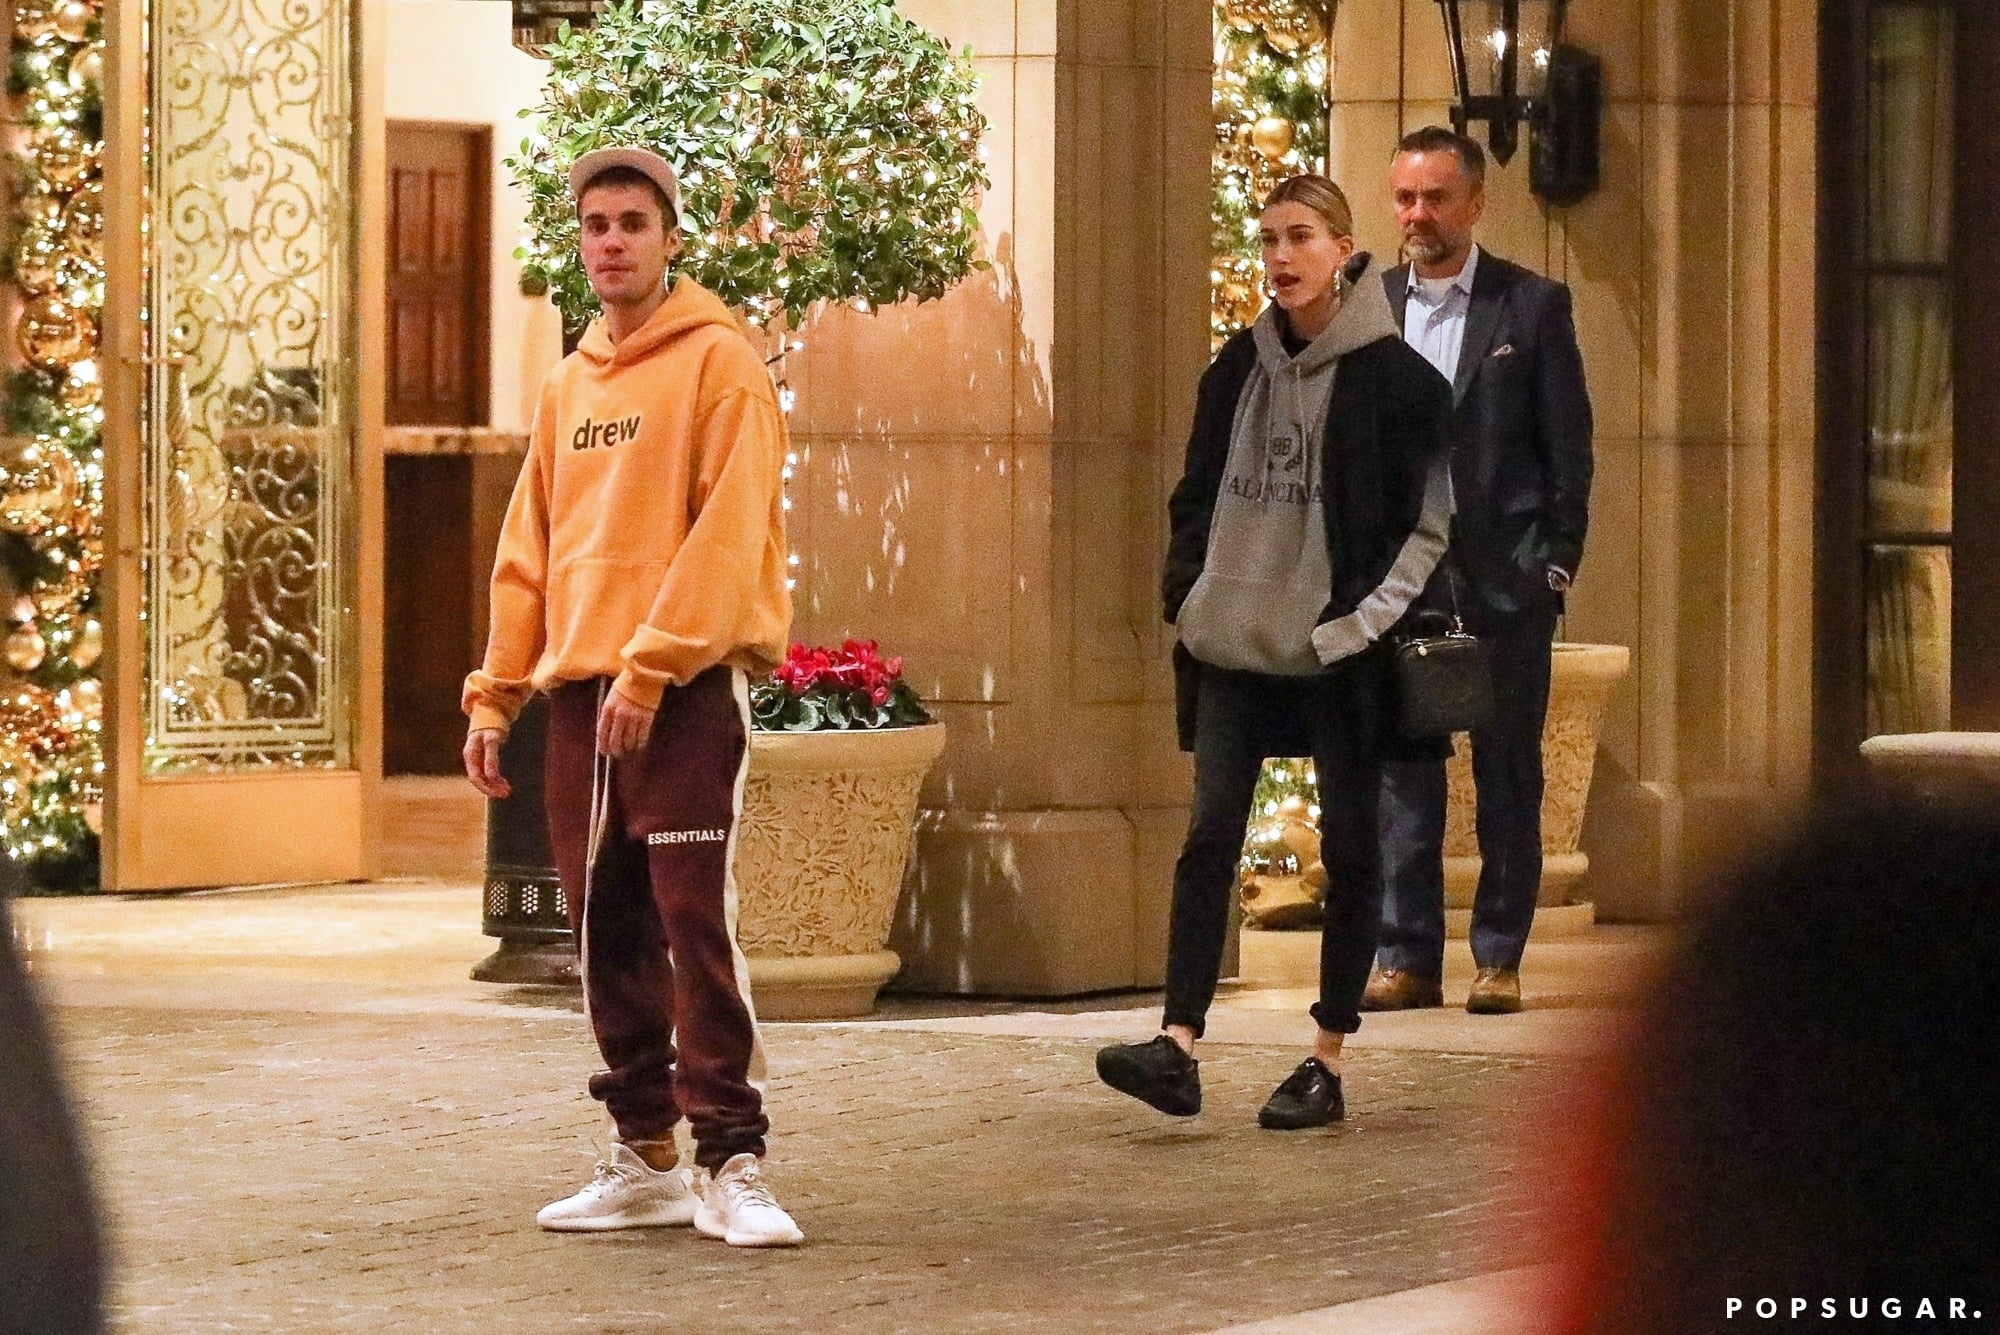 Hailey Baldwin and Justin Bieber Wearing Sweatshirts